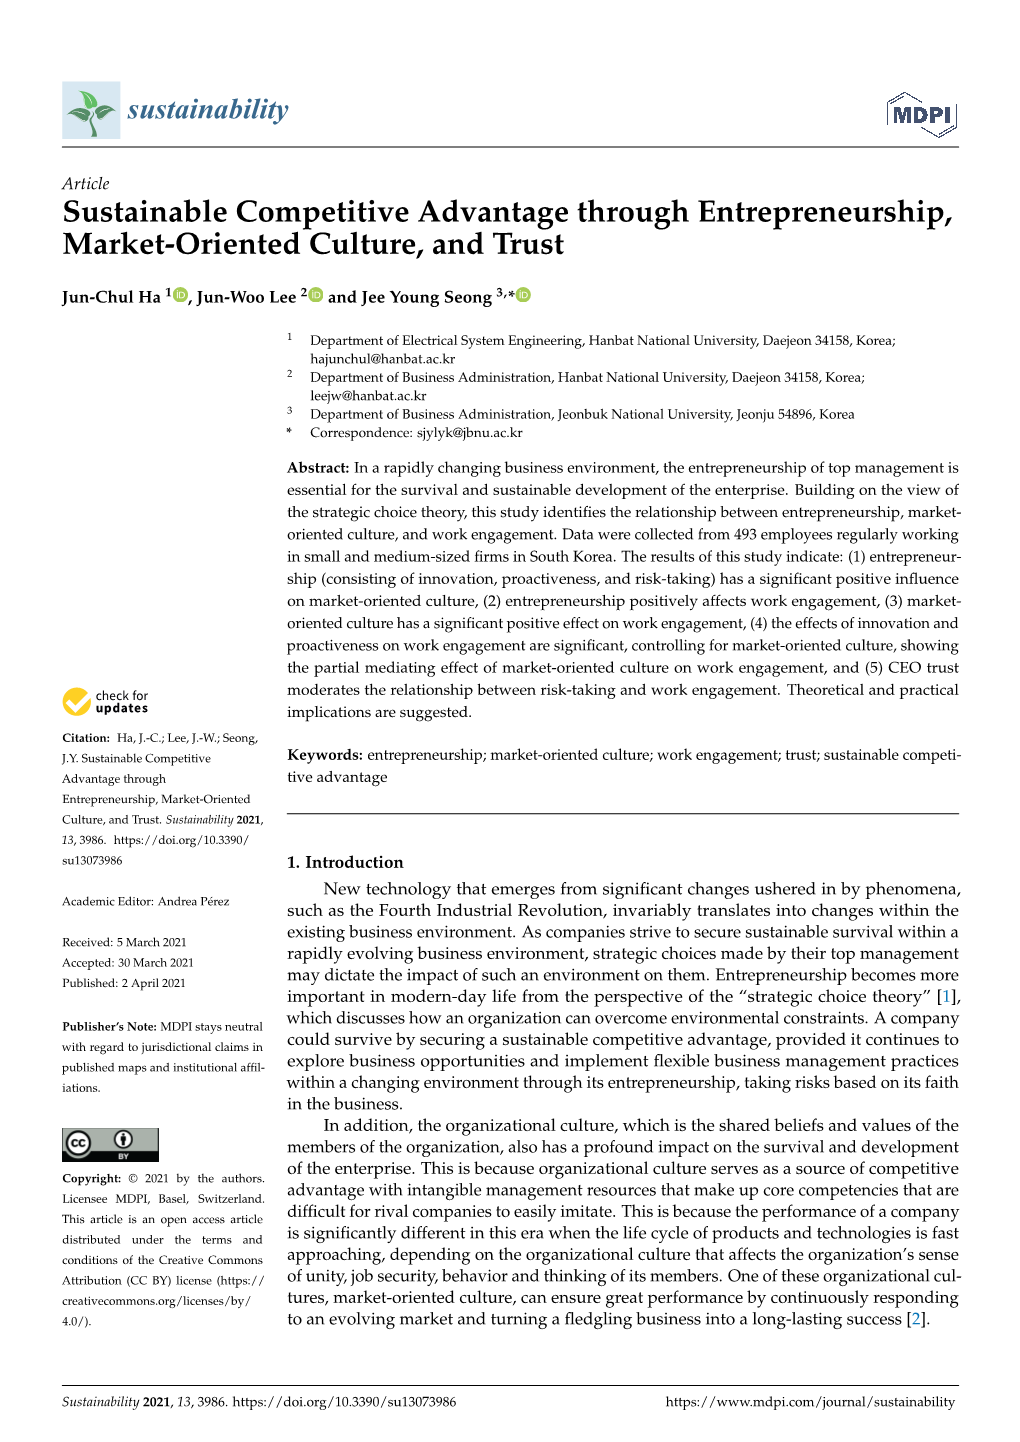 Sustainable Competitive Advantage Through Entrepreneurship, Market-Oriented Culture, and Trust